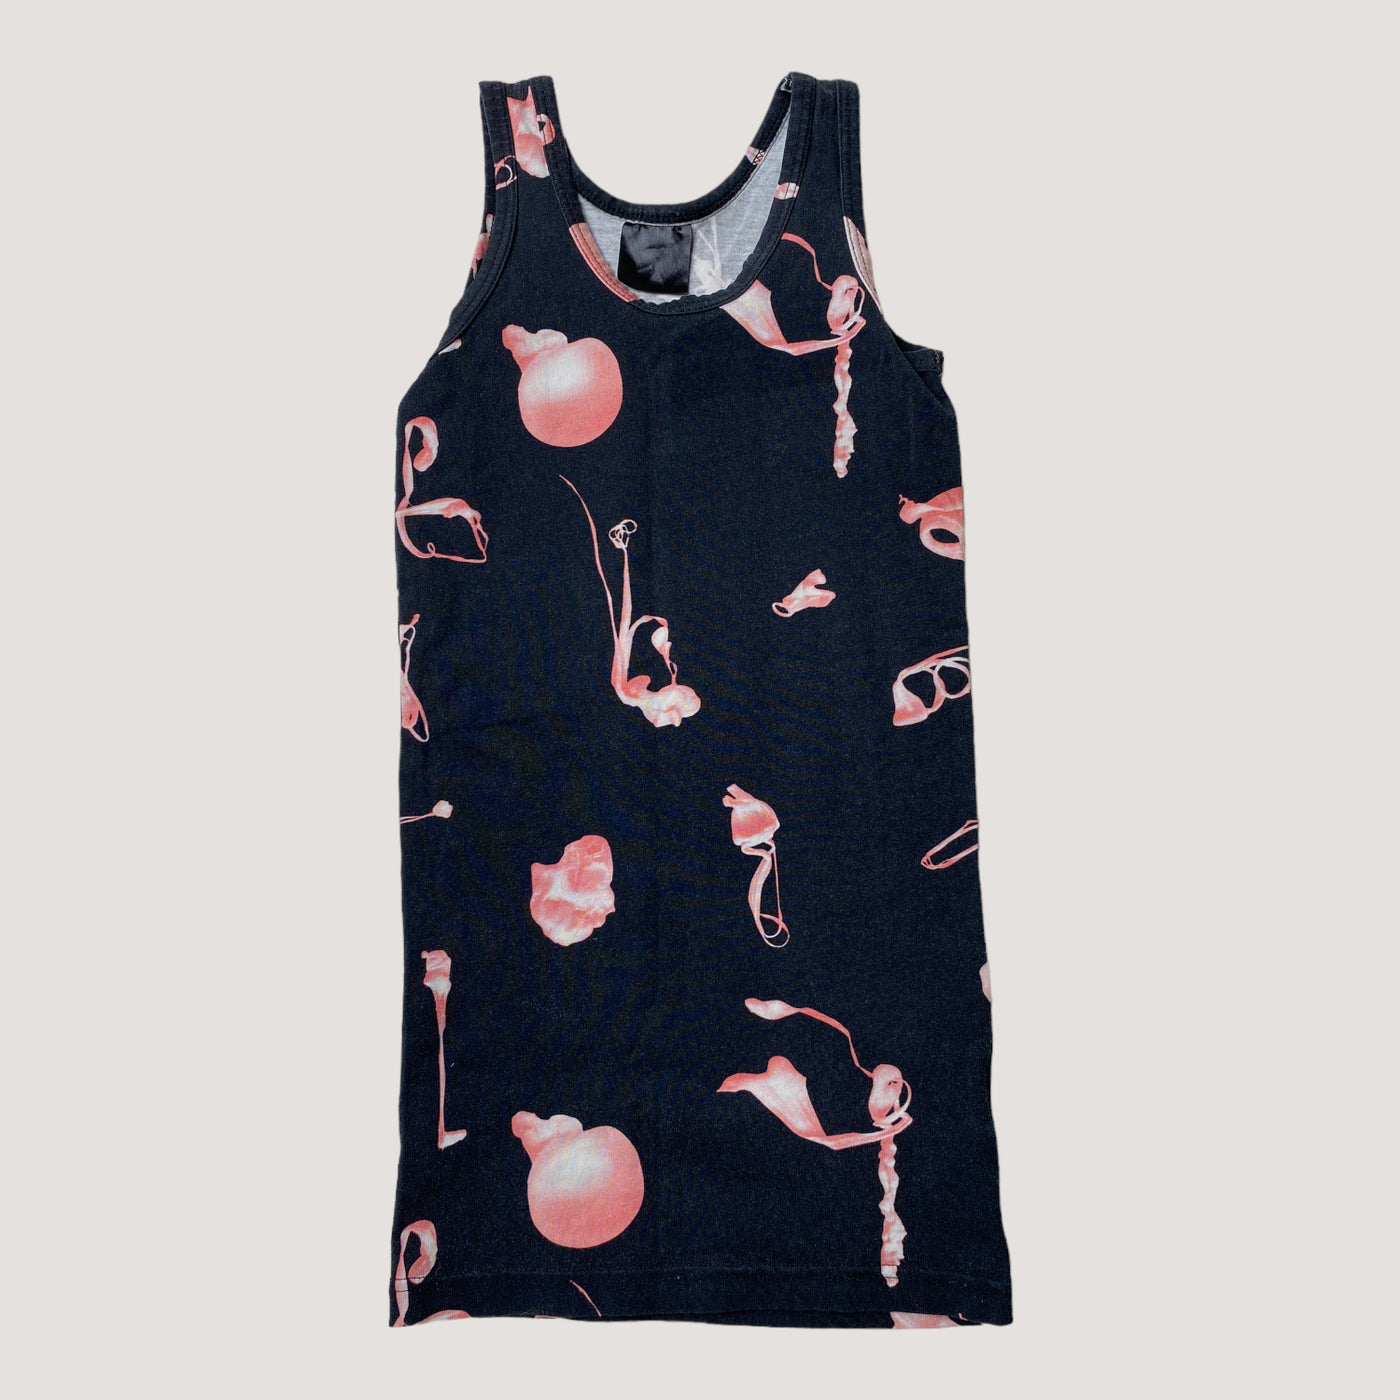 Vimma dress, black/pink | 100cm